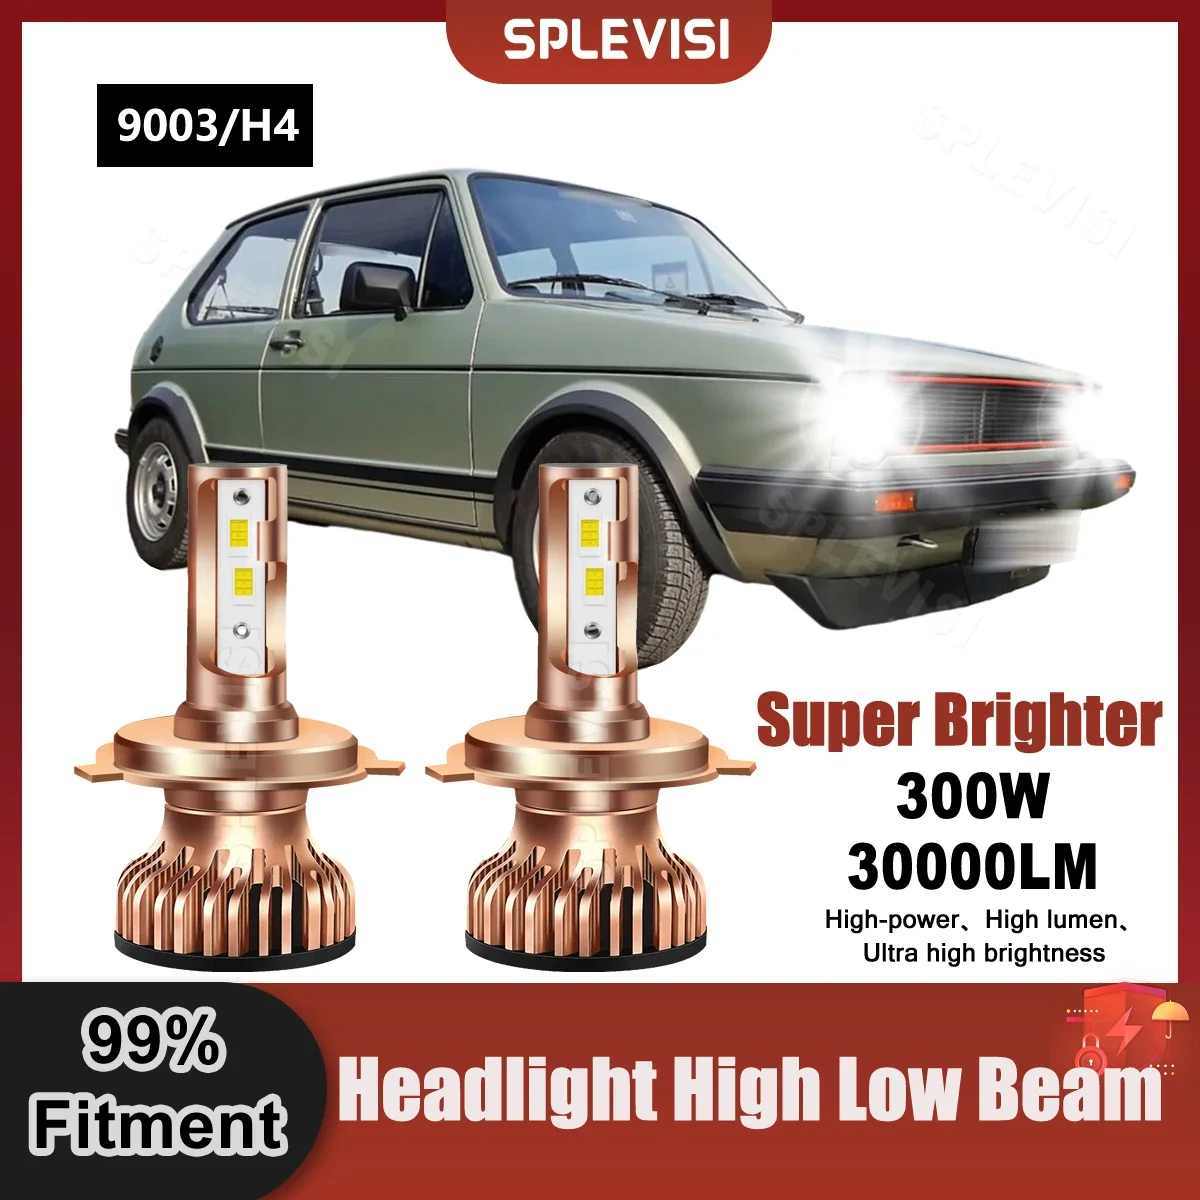 

Plug And Play 2PCS 9003/H4 LED Headlight High Low Beam Bulbs For VW Golf MK2 1983 1984 1985 1986 1987 1988 1989 1990 1991 1992